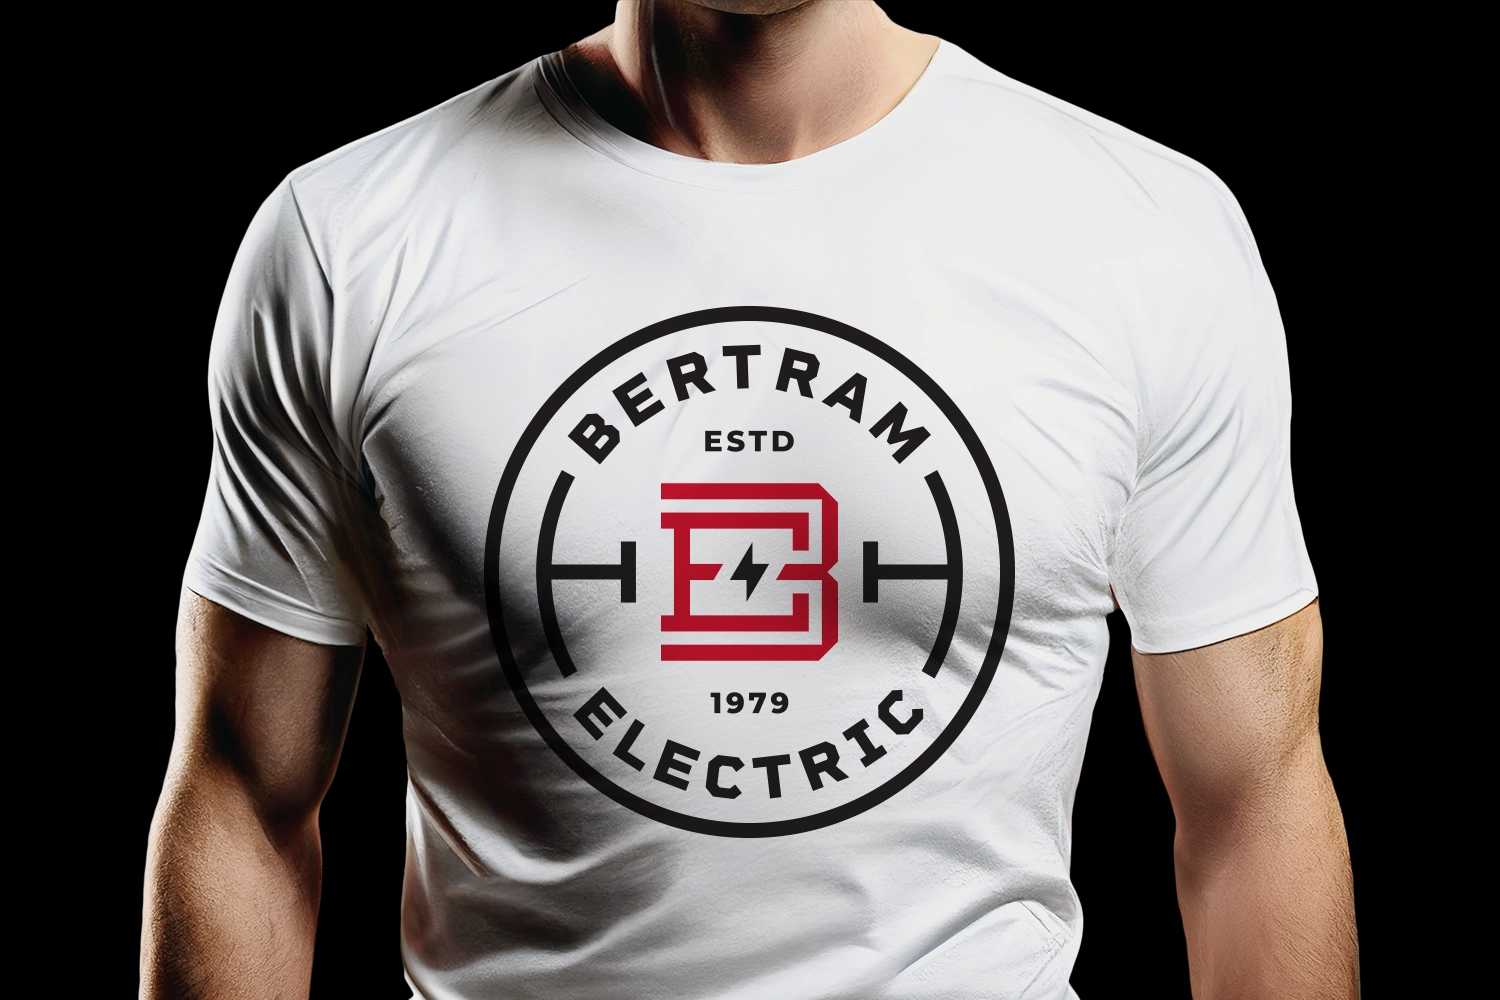 Bertram Electric Shirt